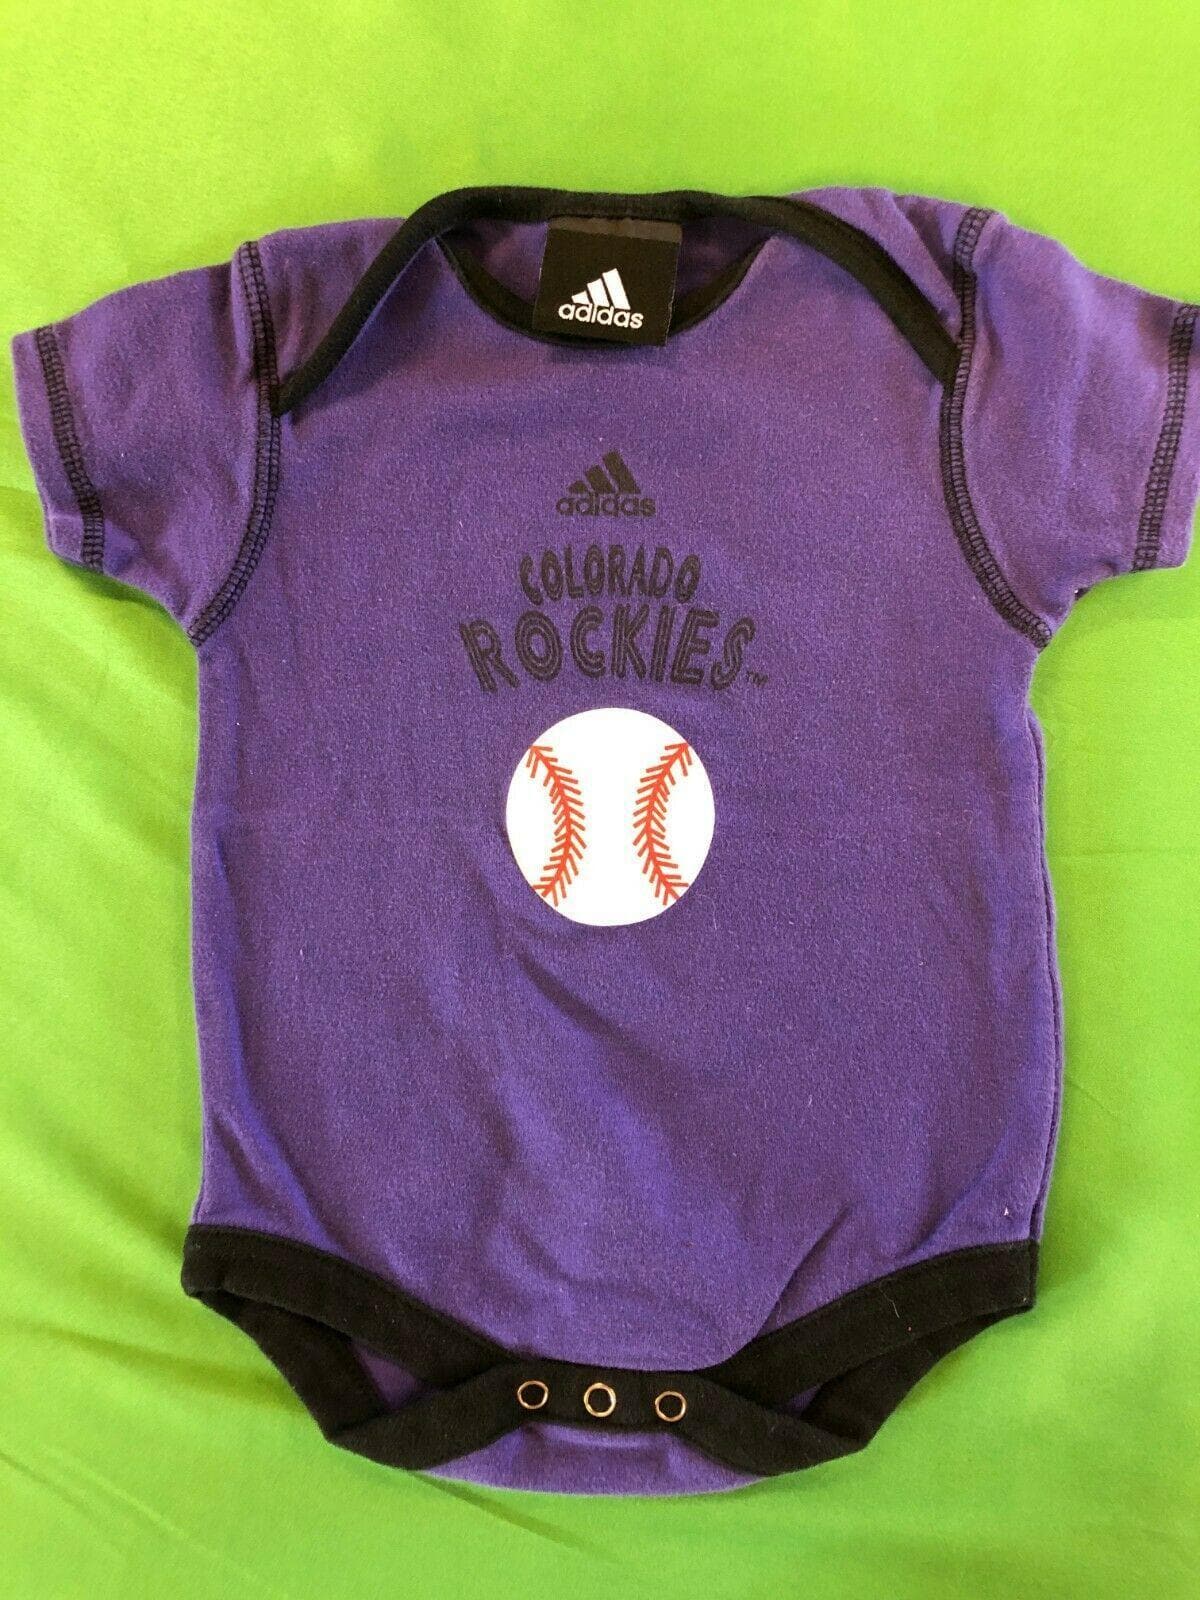 MLB Colorado Rockies Purple Bodysuit/Vest 12 Months